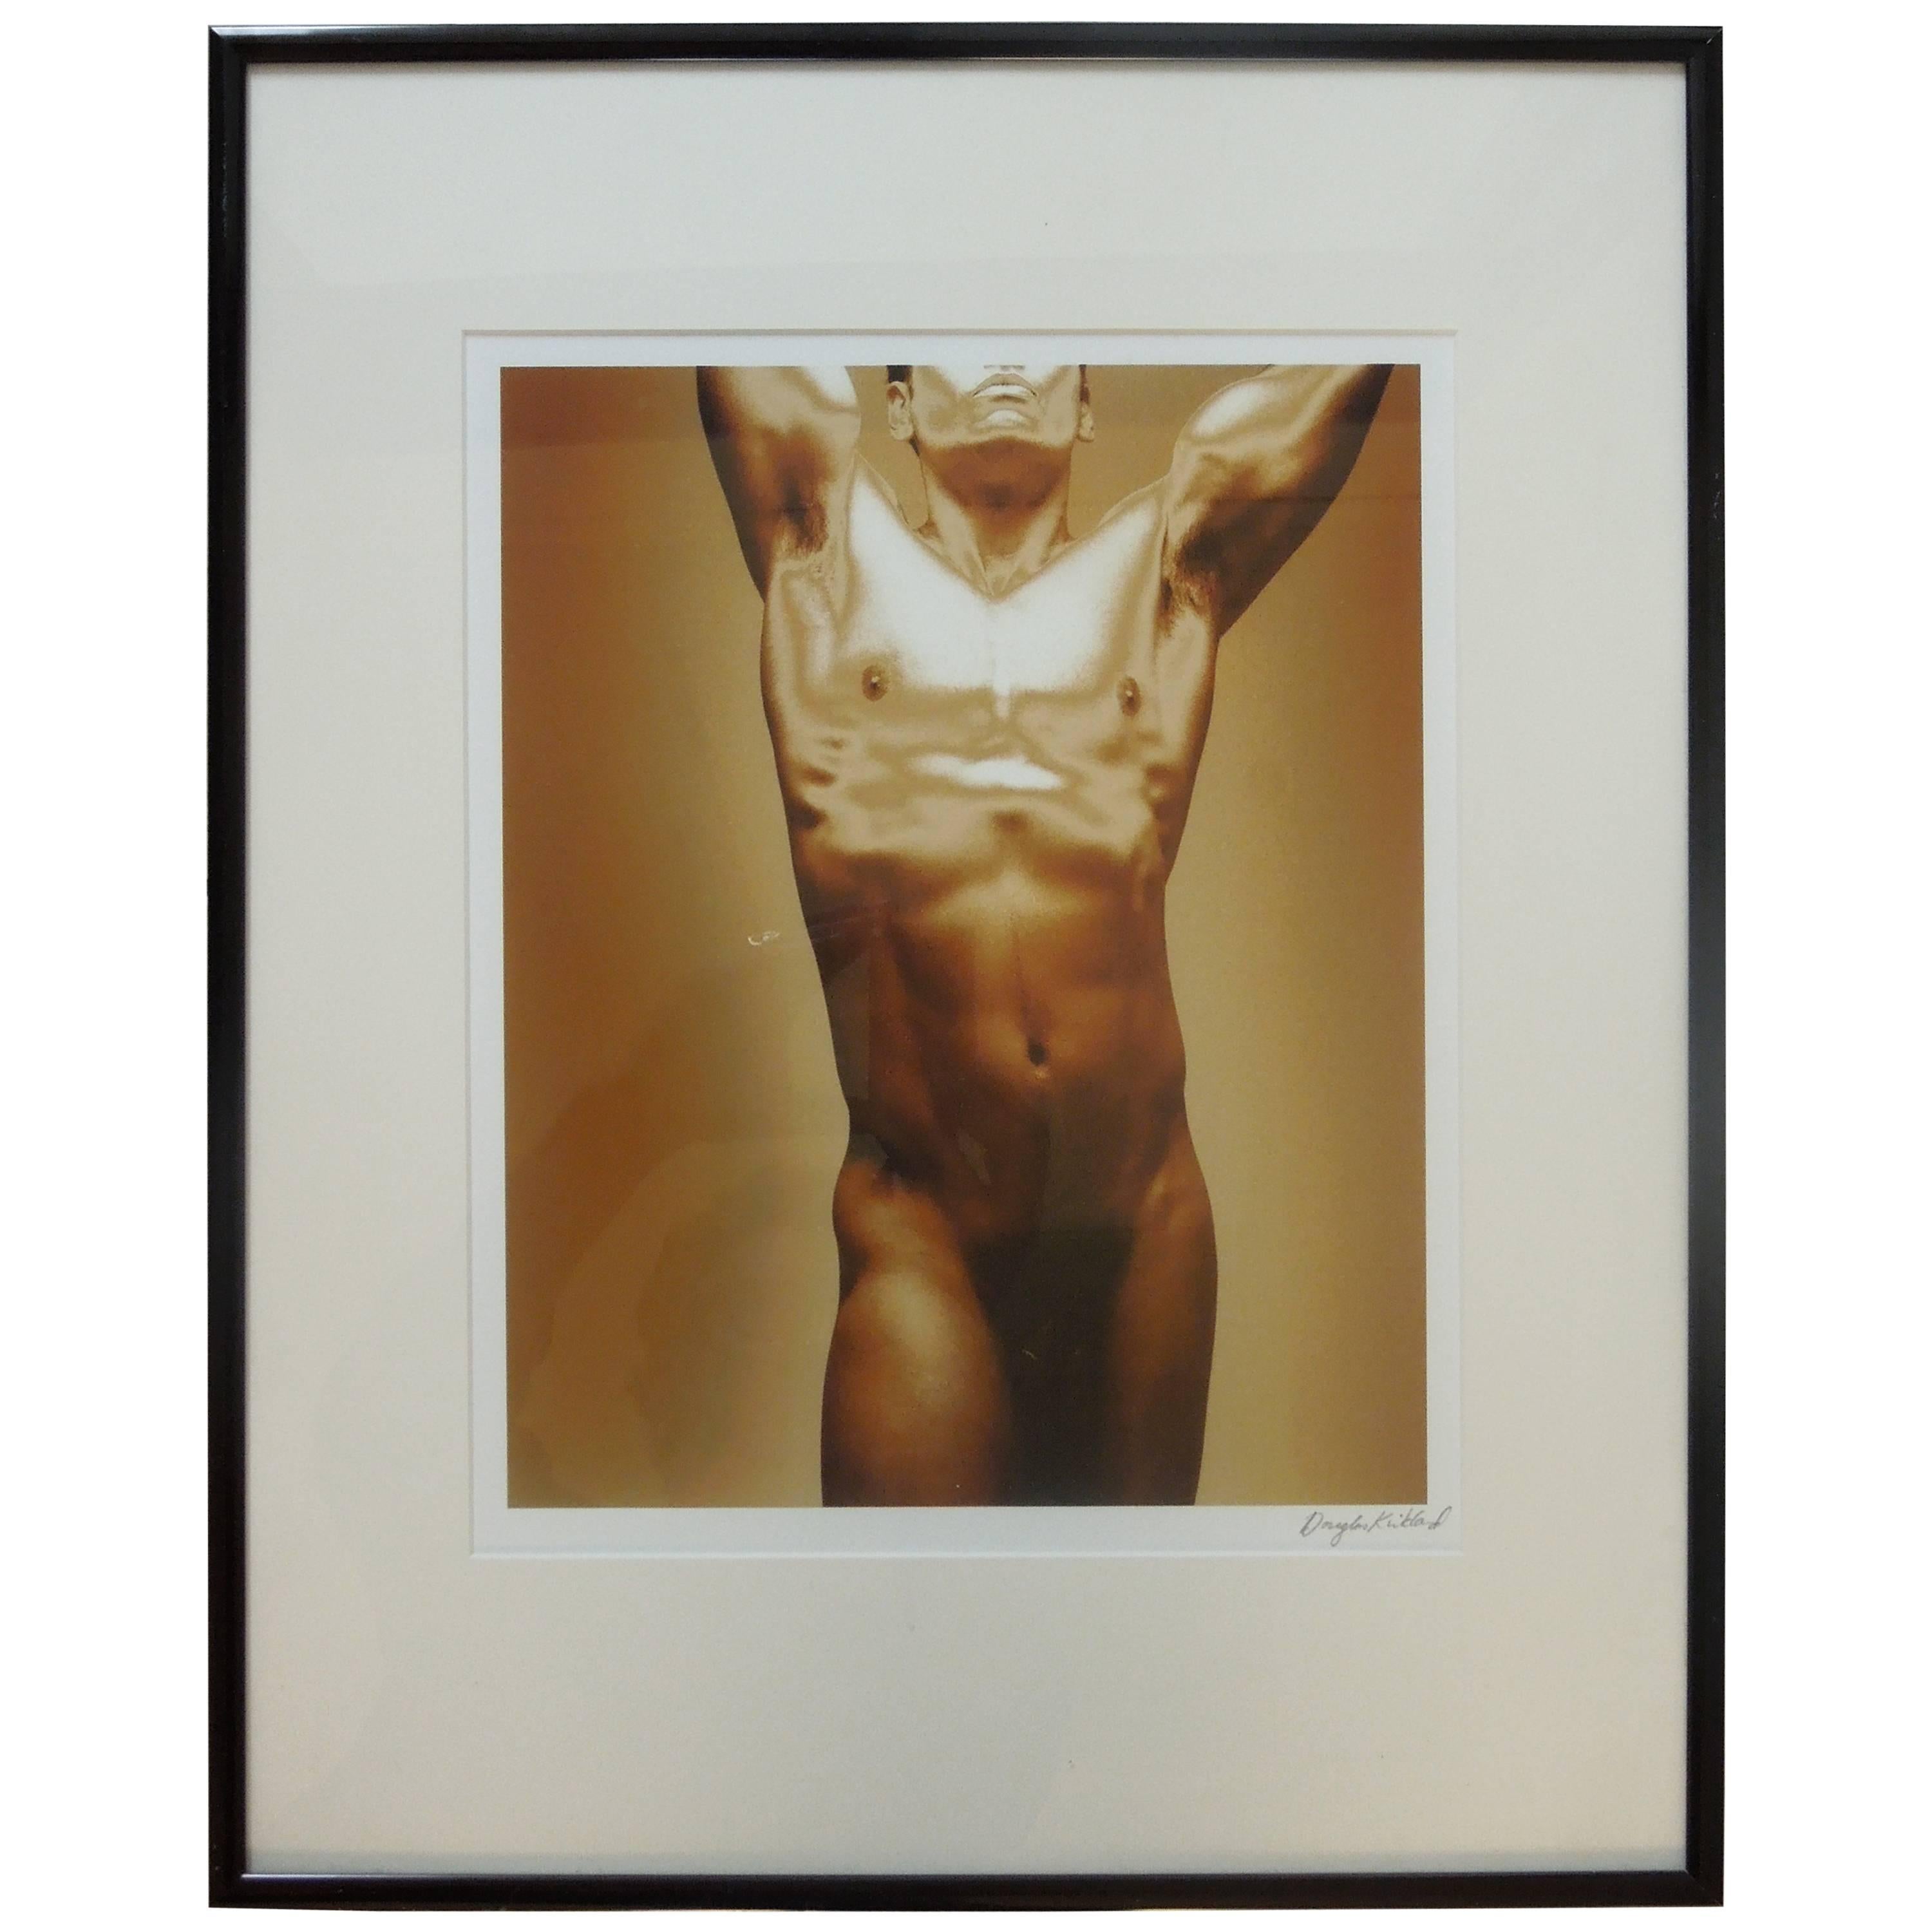  Douglas Kirkland "Golden Boy" Rare Male Nude Original Photograph 